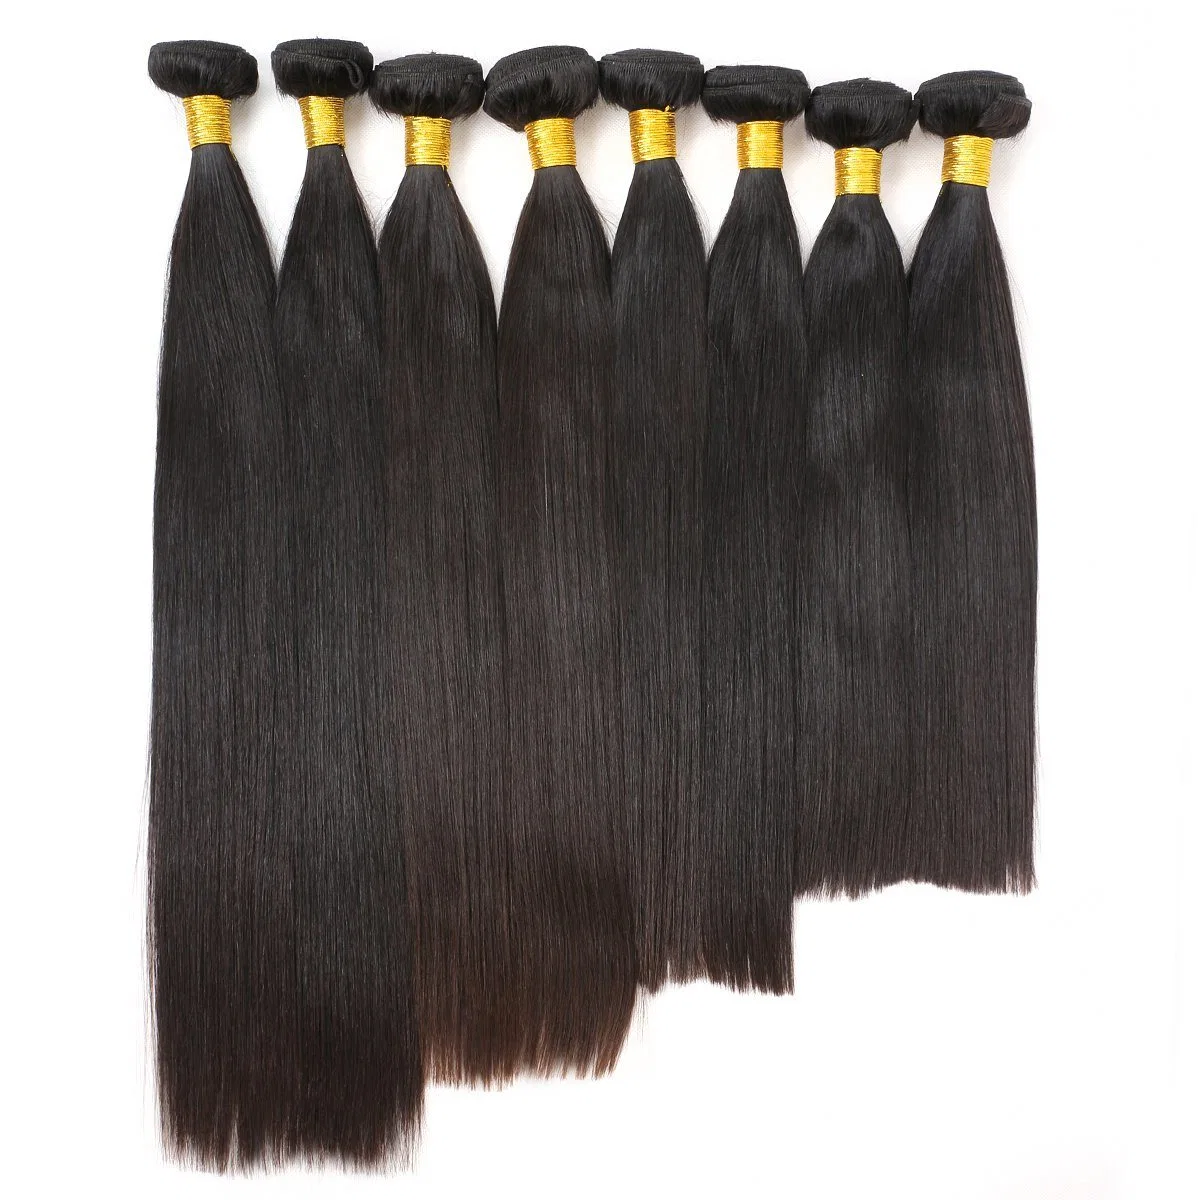 Linha de beleza natural do cabelo da Malásia Brasileiro reta na cor preta 100% de cabelo humano tecem Bundles Remy Hair 8-28 polegadas